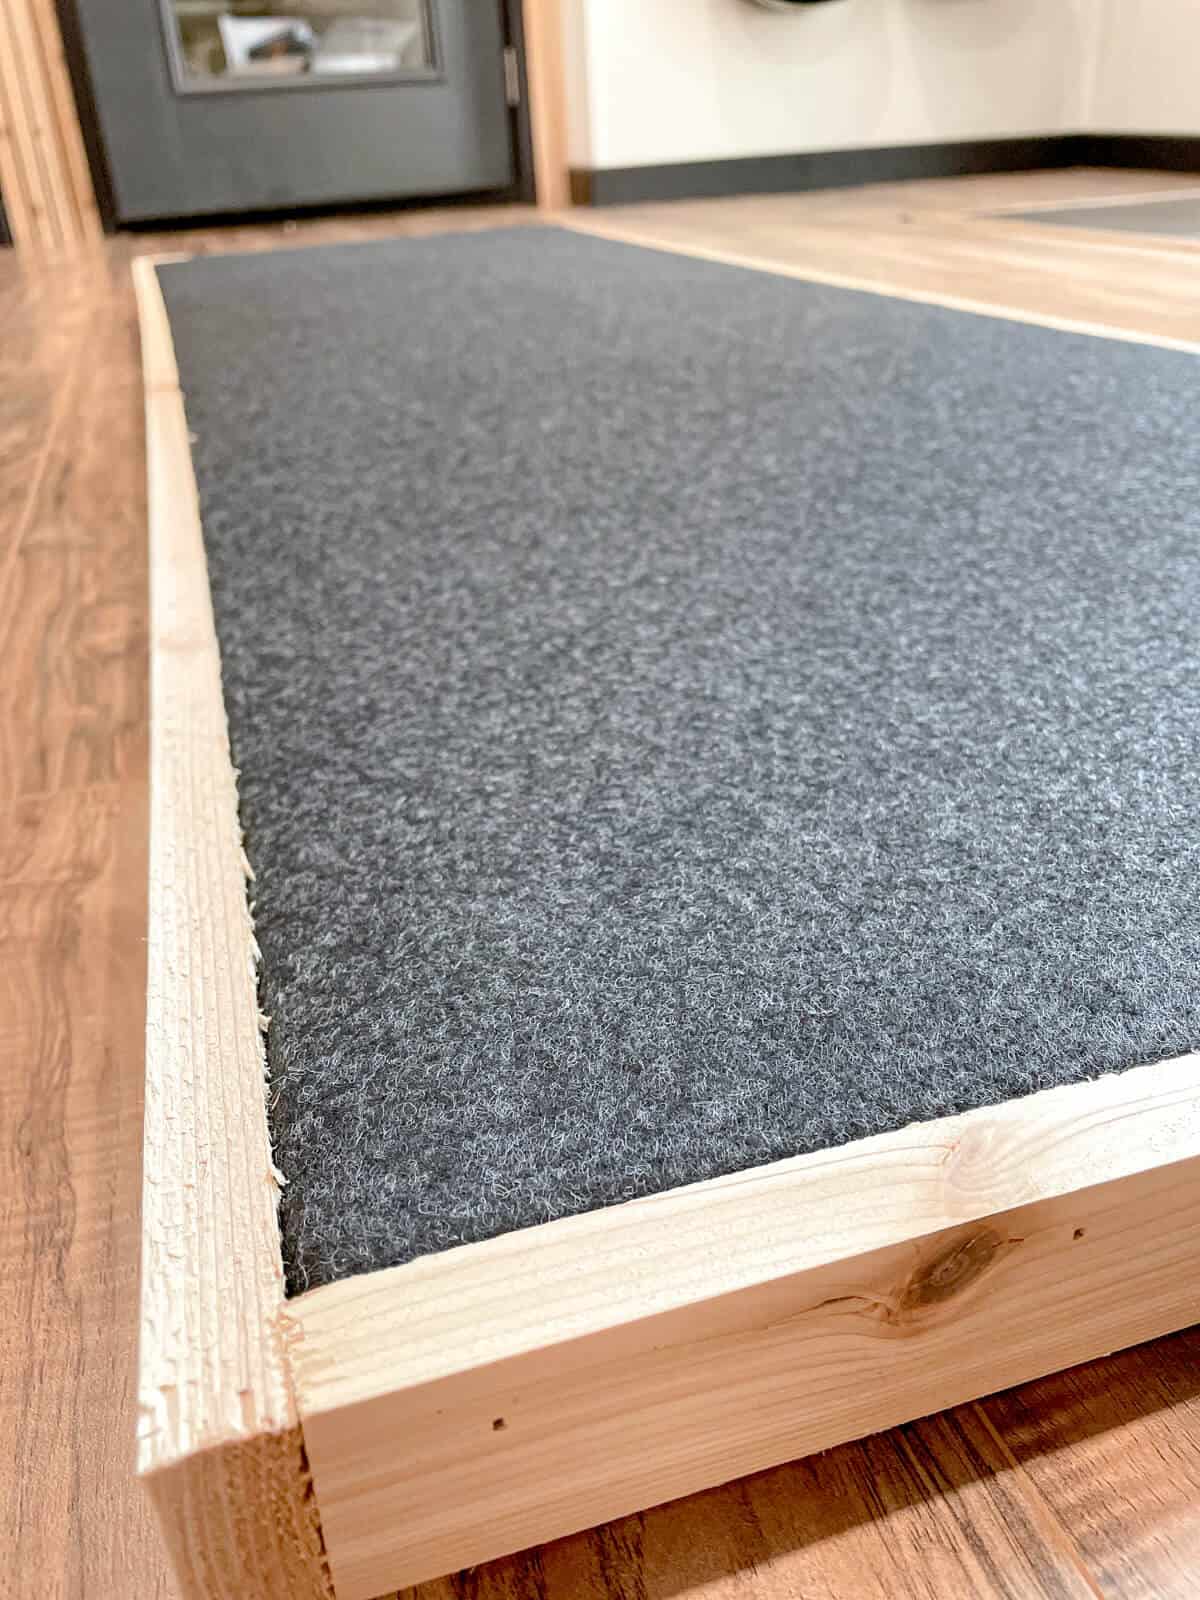 soundproof panel made with gray felt and cedar trim